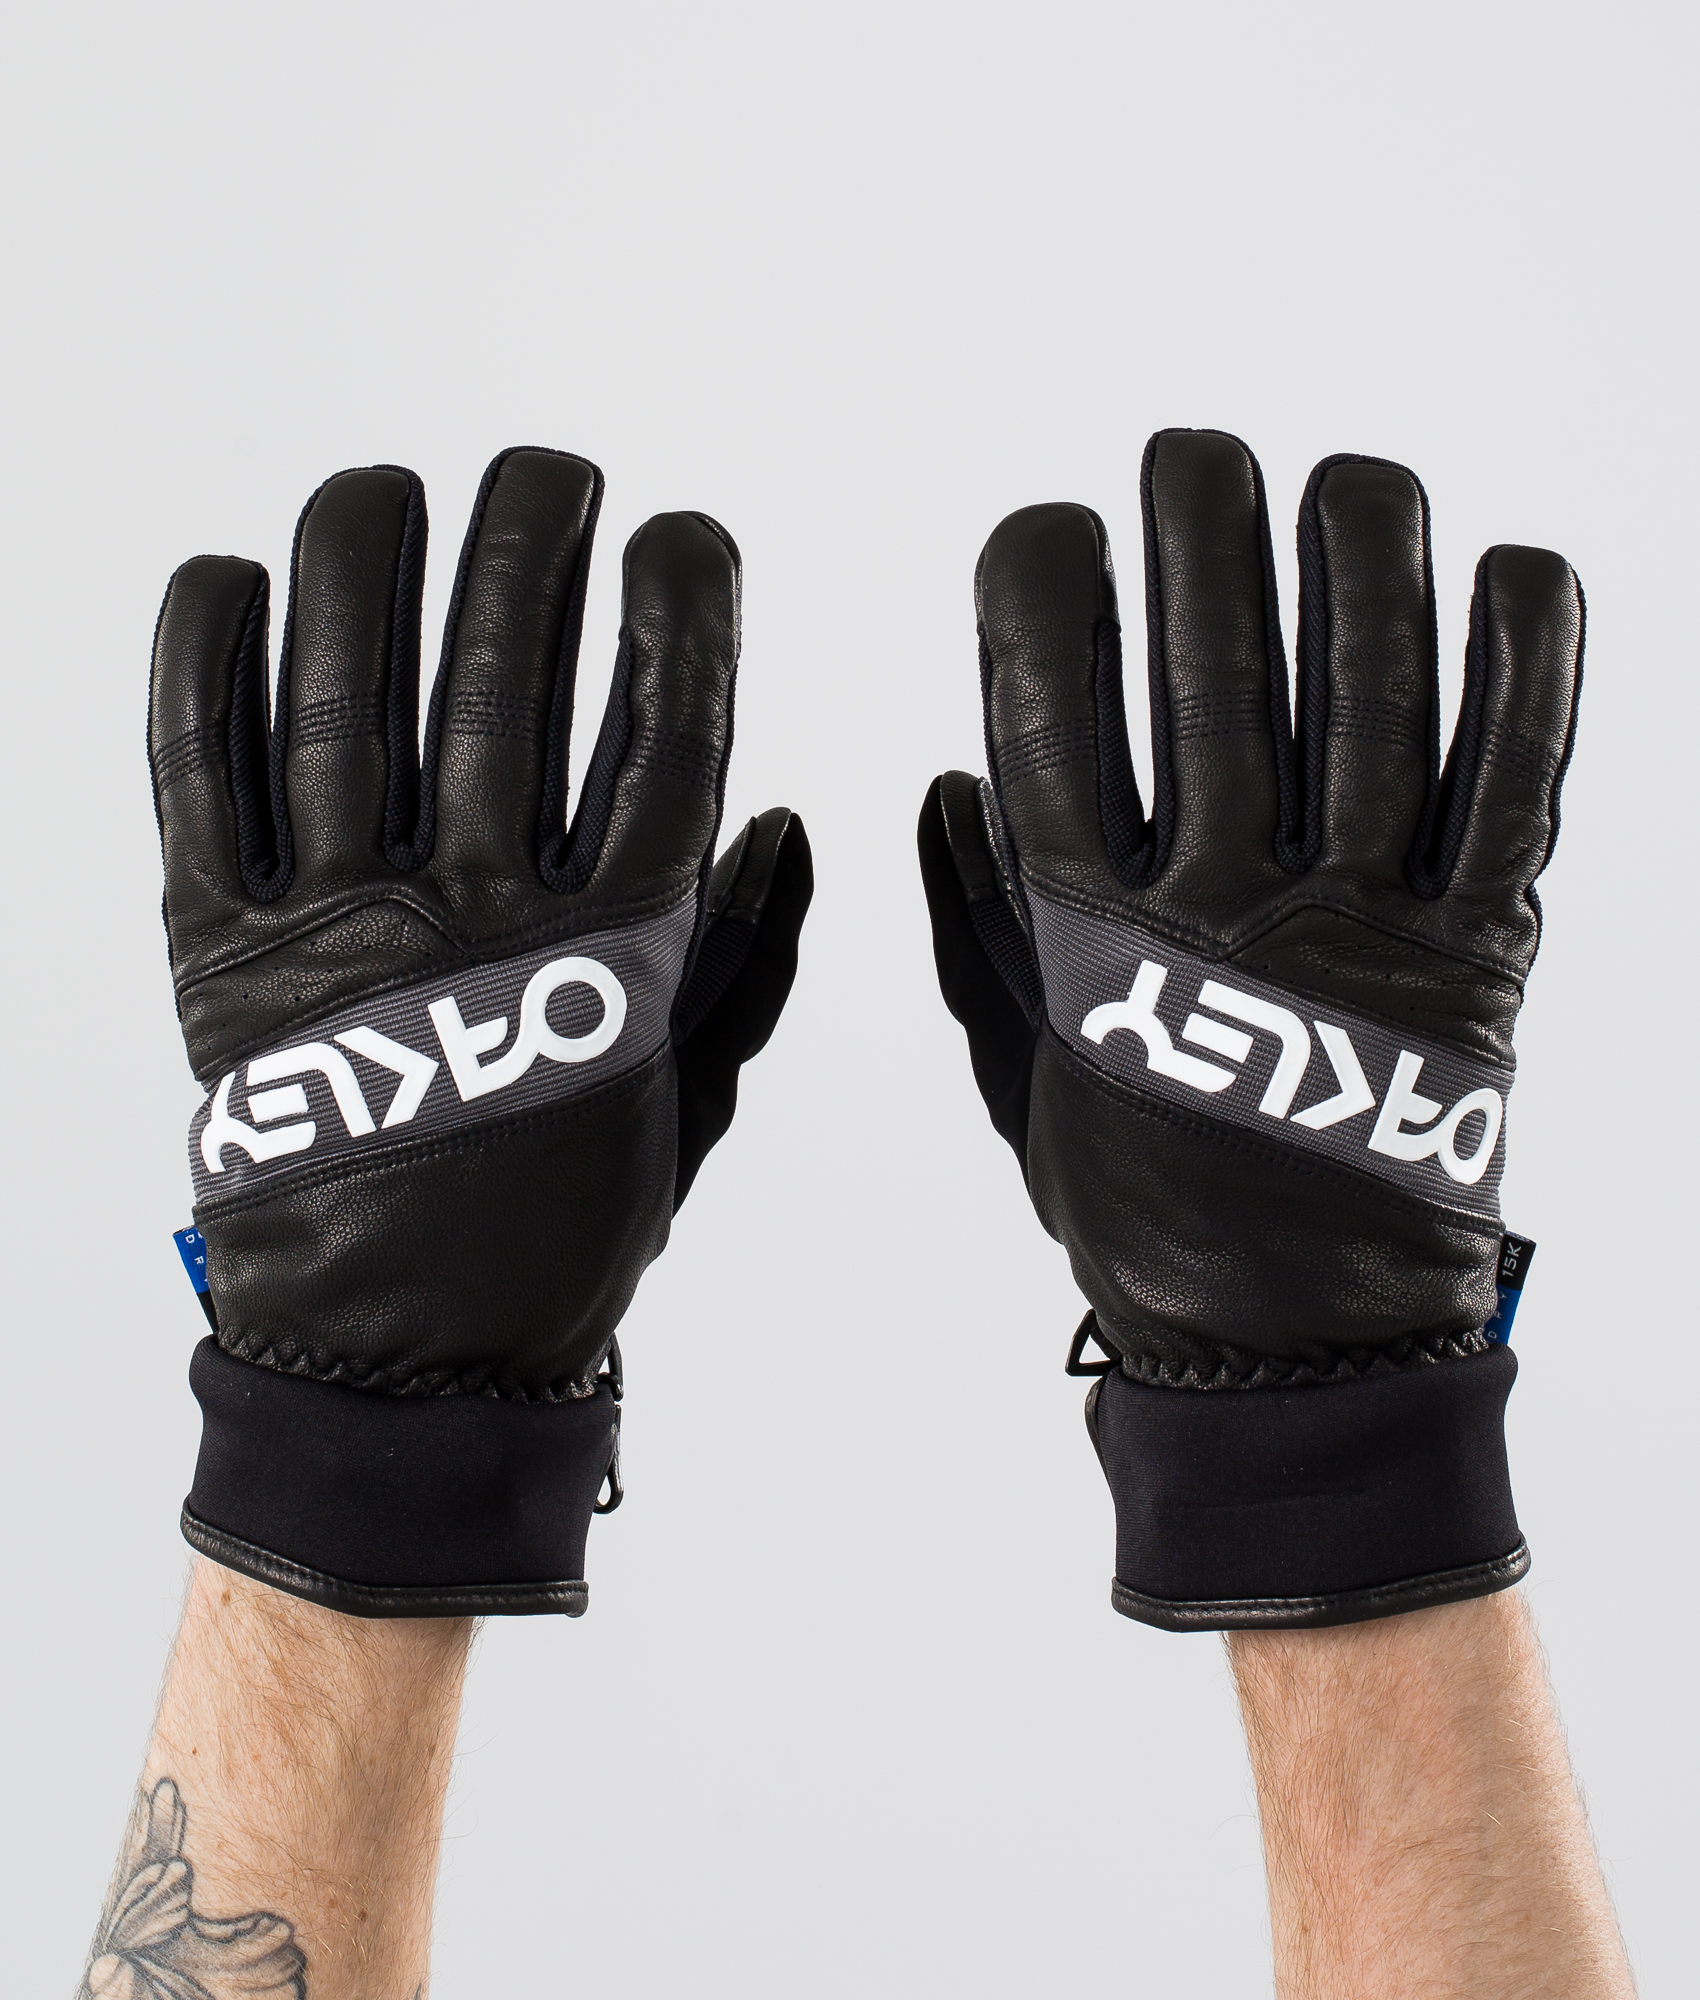 Oakley Factory Winter 2.0 Ski Gloves 